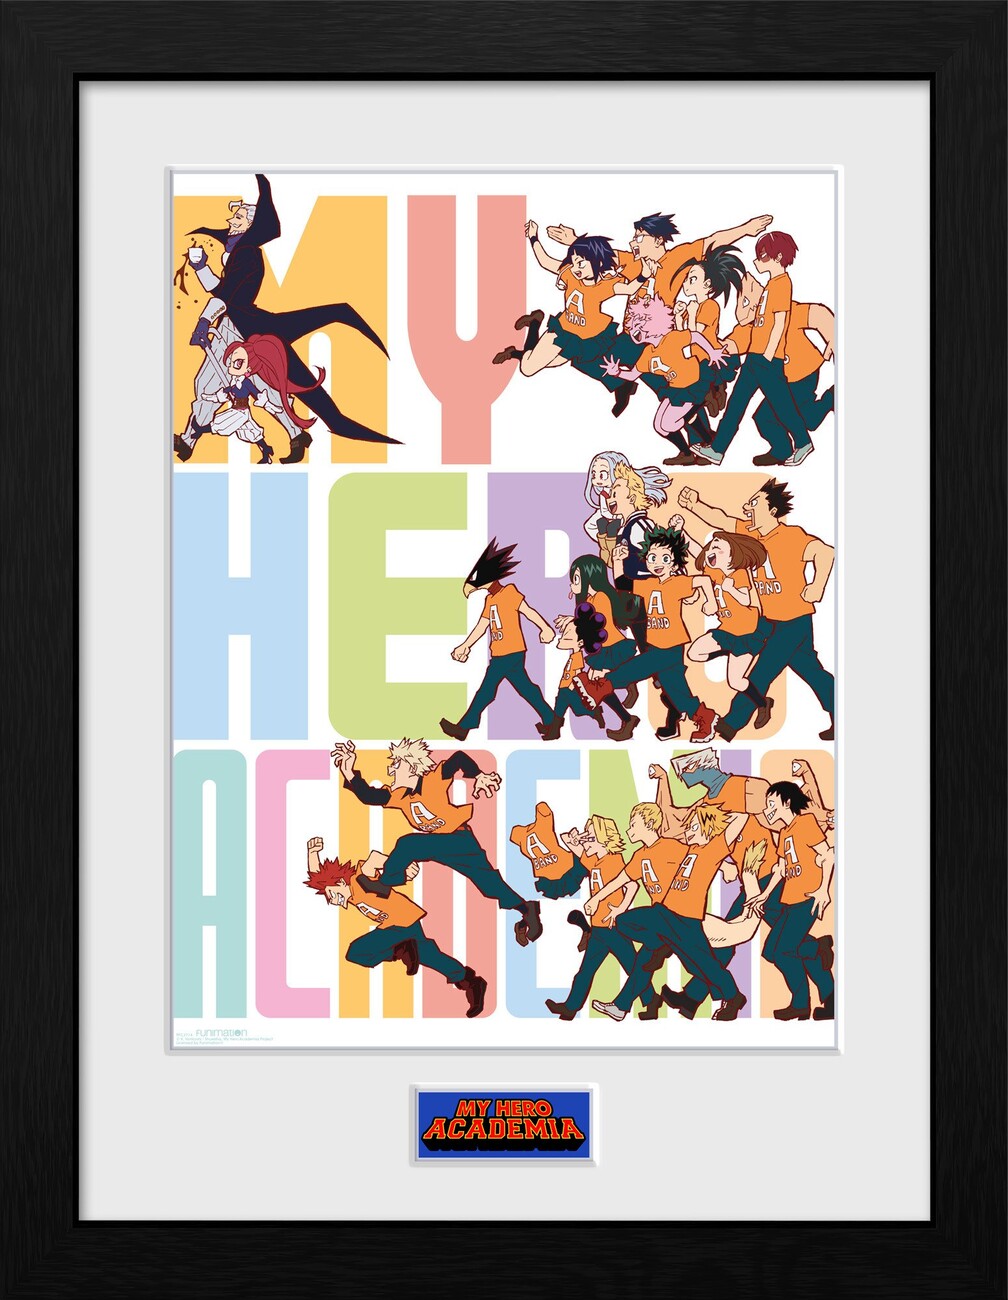 My Hero Academia - Season 4 Key Art 1 Poster Emoldurado, Quadro em